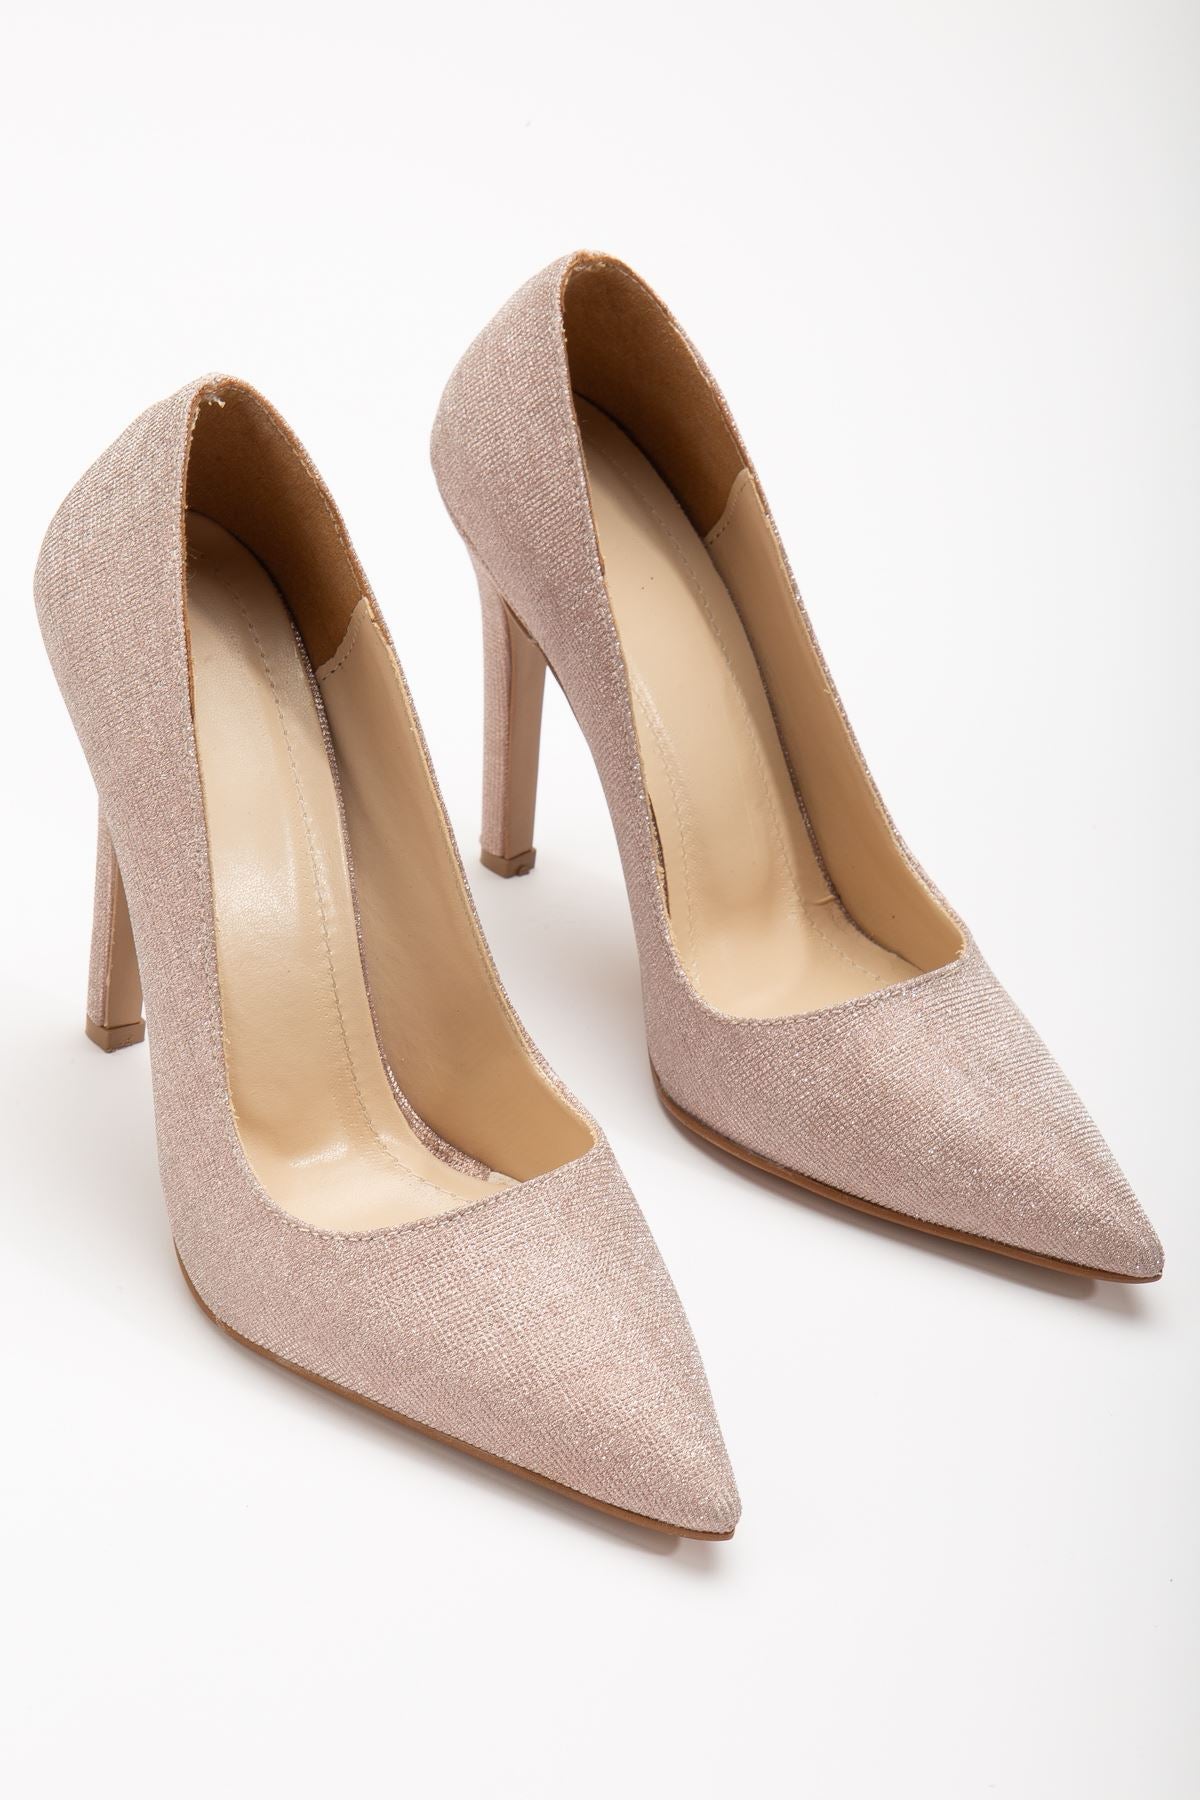 Beige Glitter Pointed Low-cut Women's High Heels Shoes - STREETMODE™